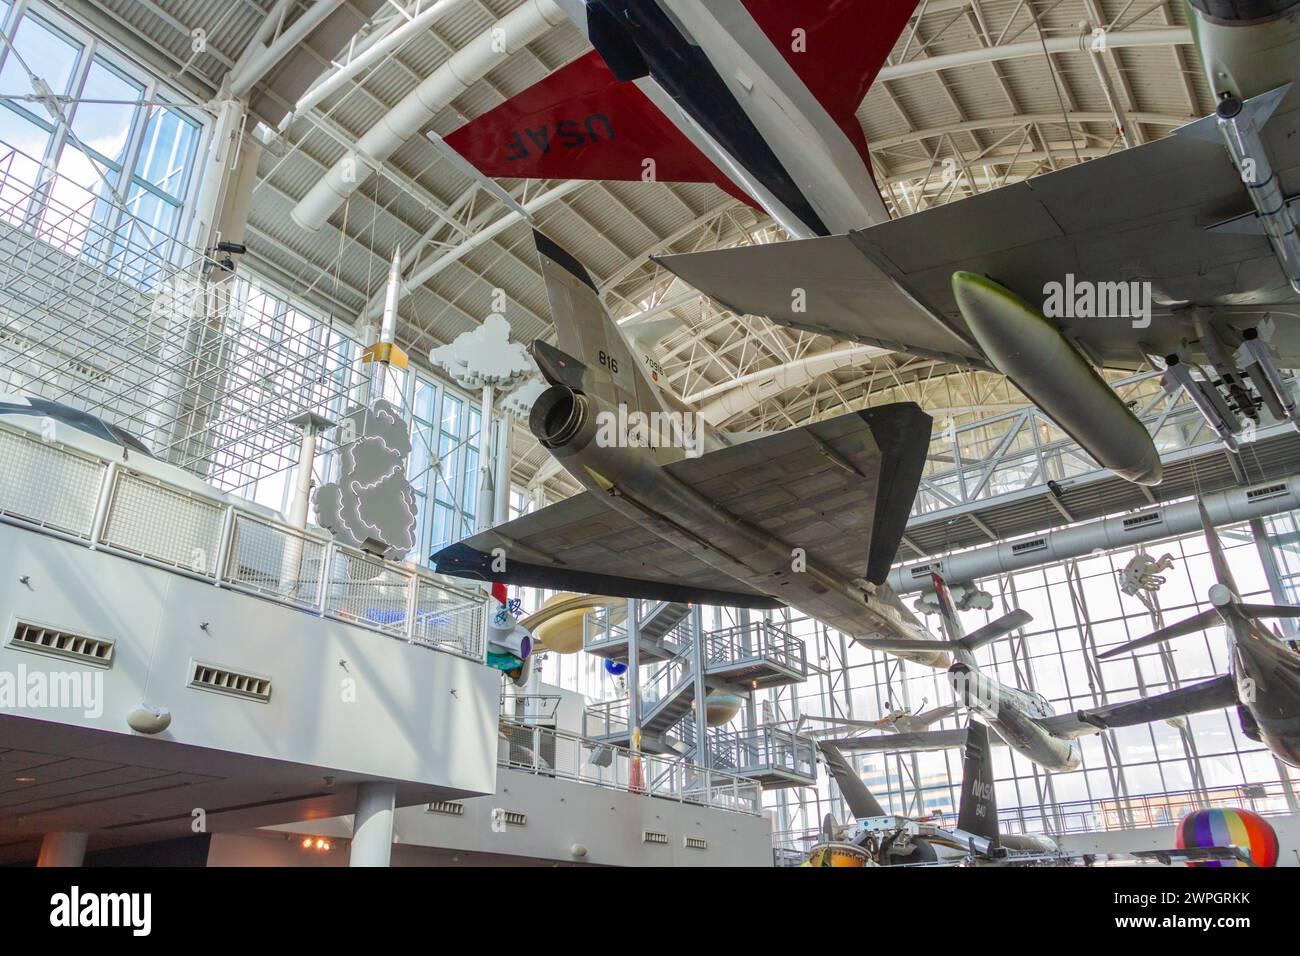 The Virginia Air and Space center Museum in Hampton Roads, Virginia. Stock Photo